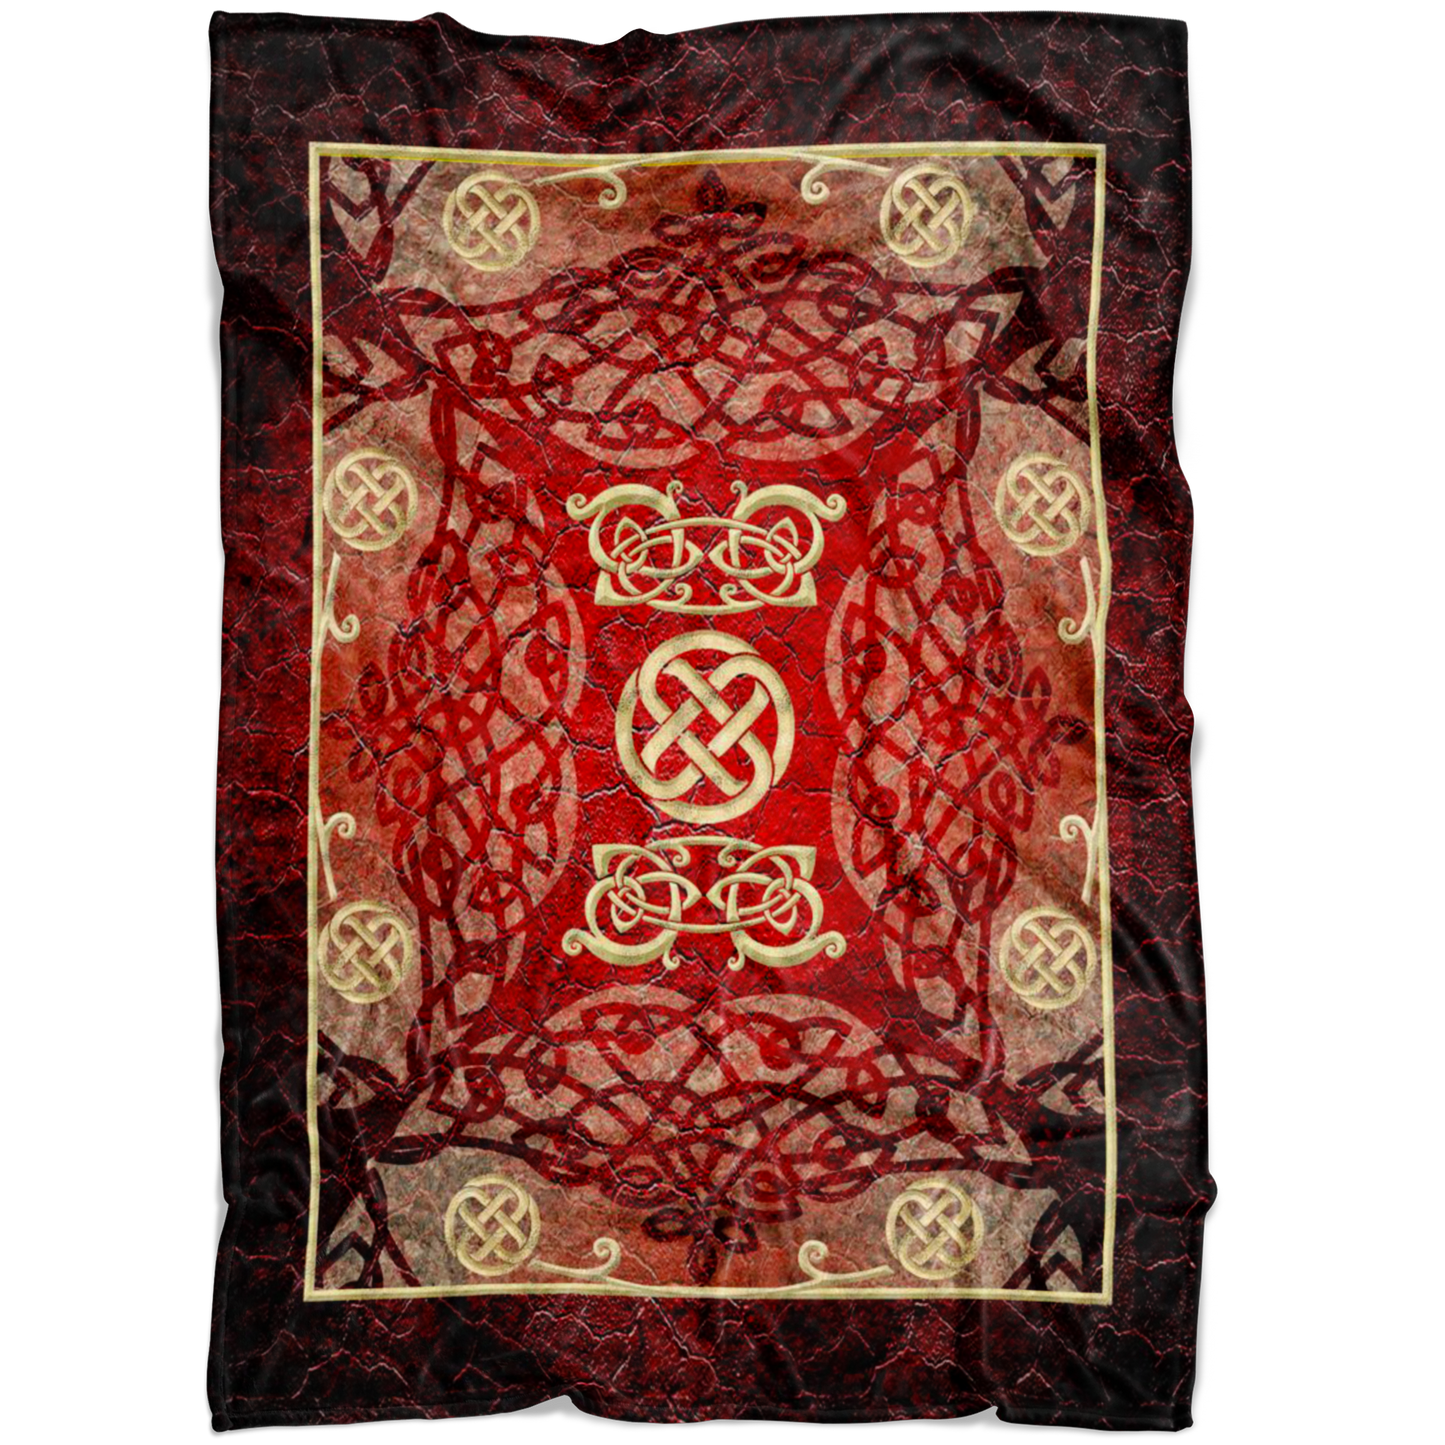 Celtic art, celtic knot, celtic medallion, celtic knotwork, celtic knot art, fleece blanket, ravensdaughter